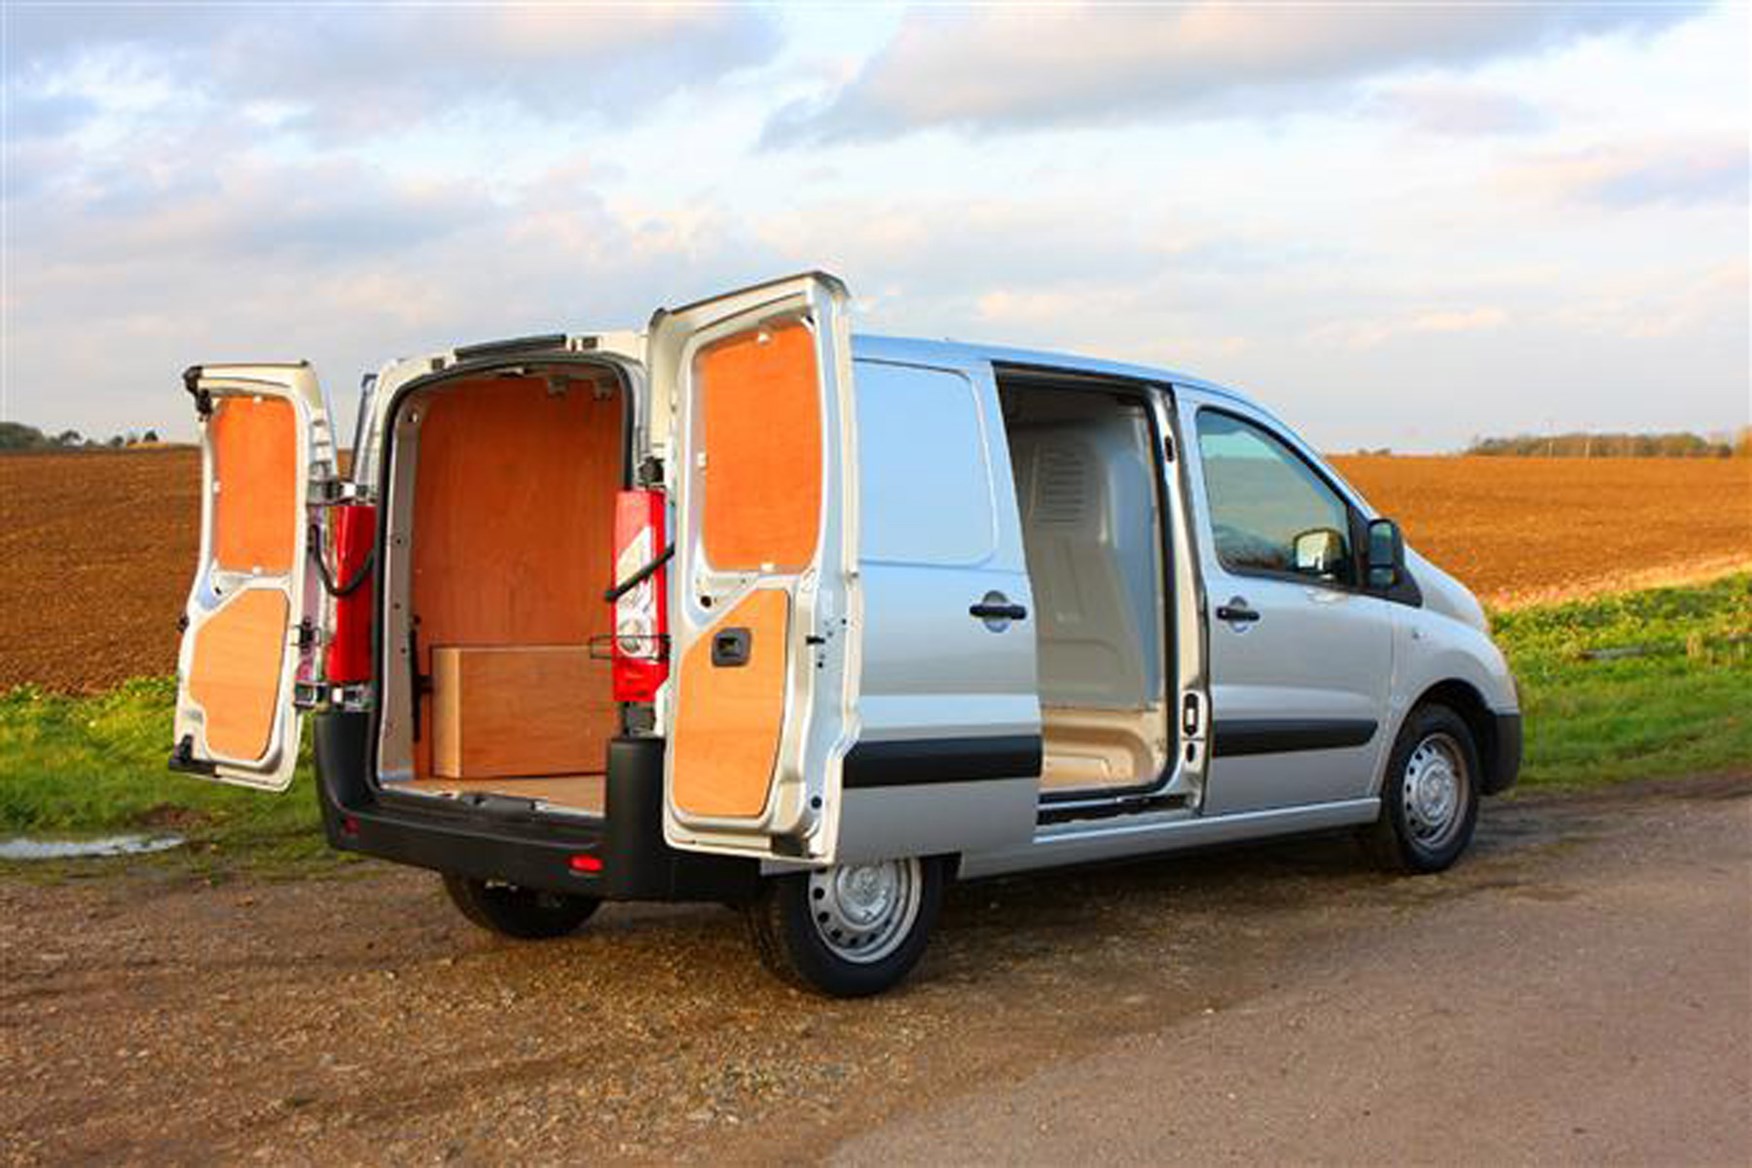 Peugeot Expert 2007-2015 review on Parkers Vans - load area access